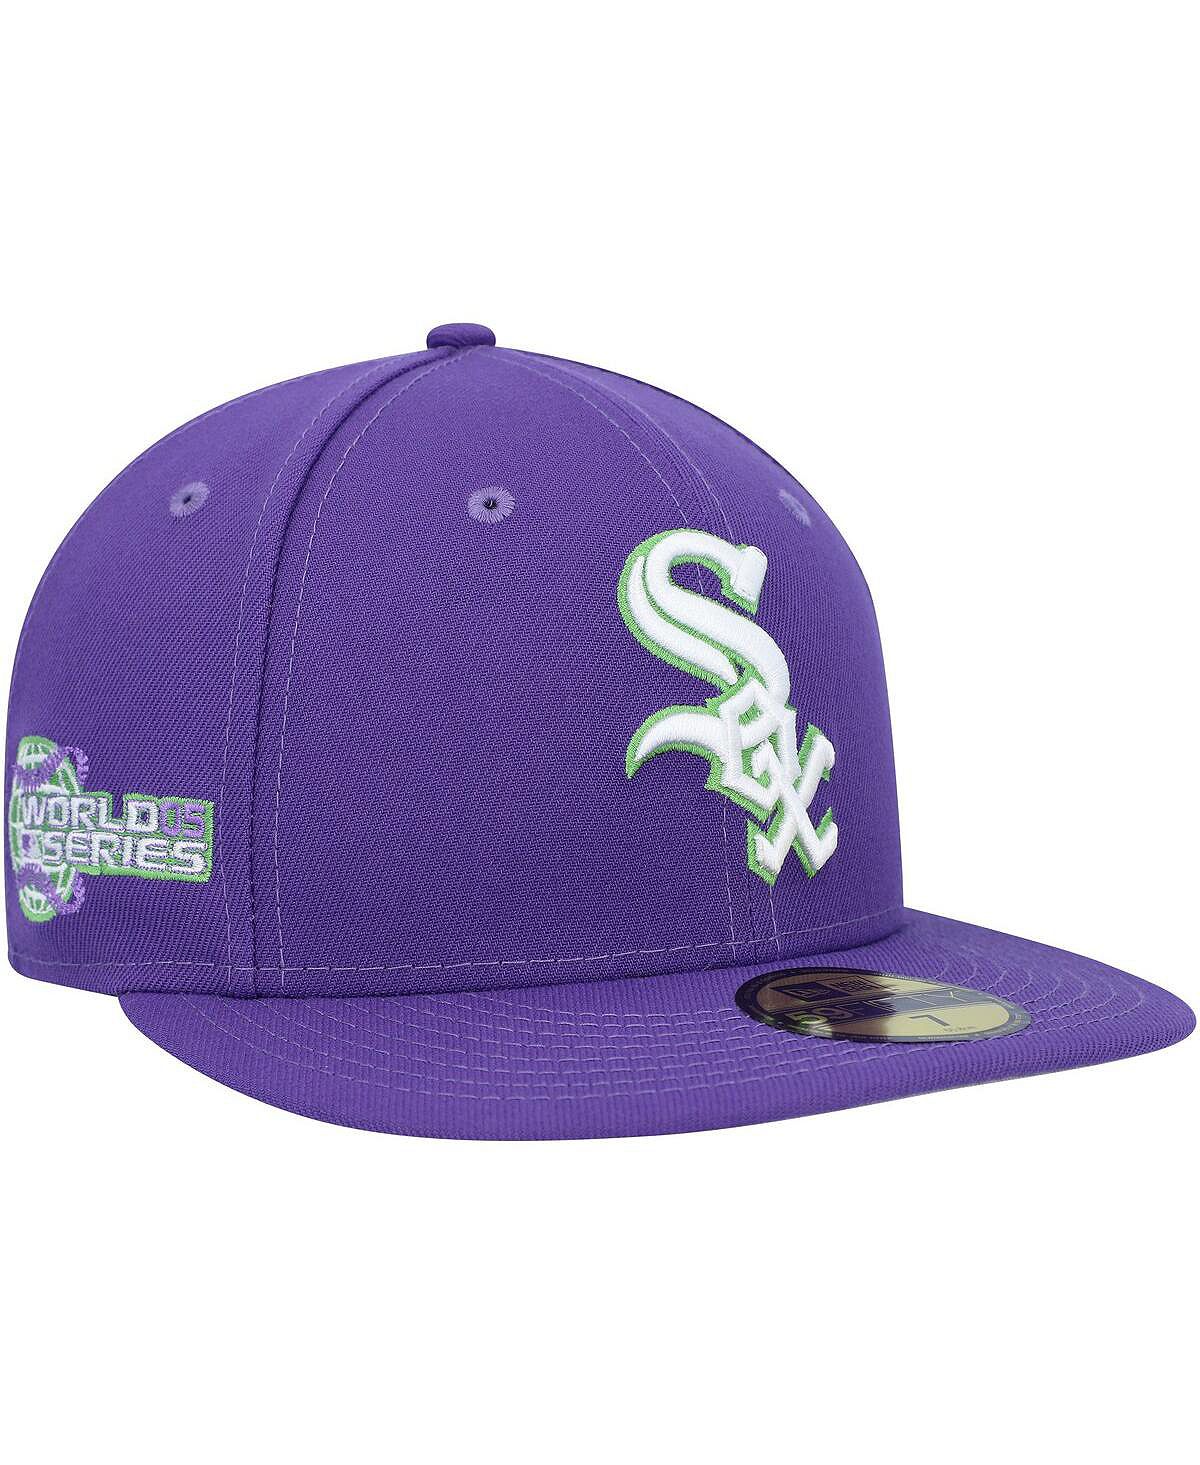 Мужская фиолетовая кепка Chicago White Sox Lime с боковой нашивкой 59FIFTY. New Era